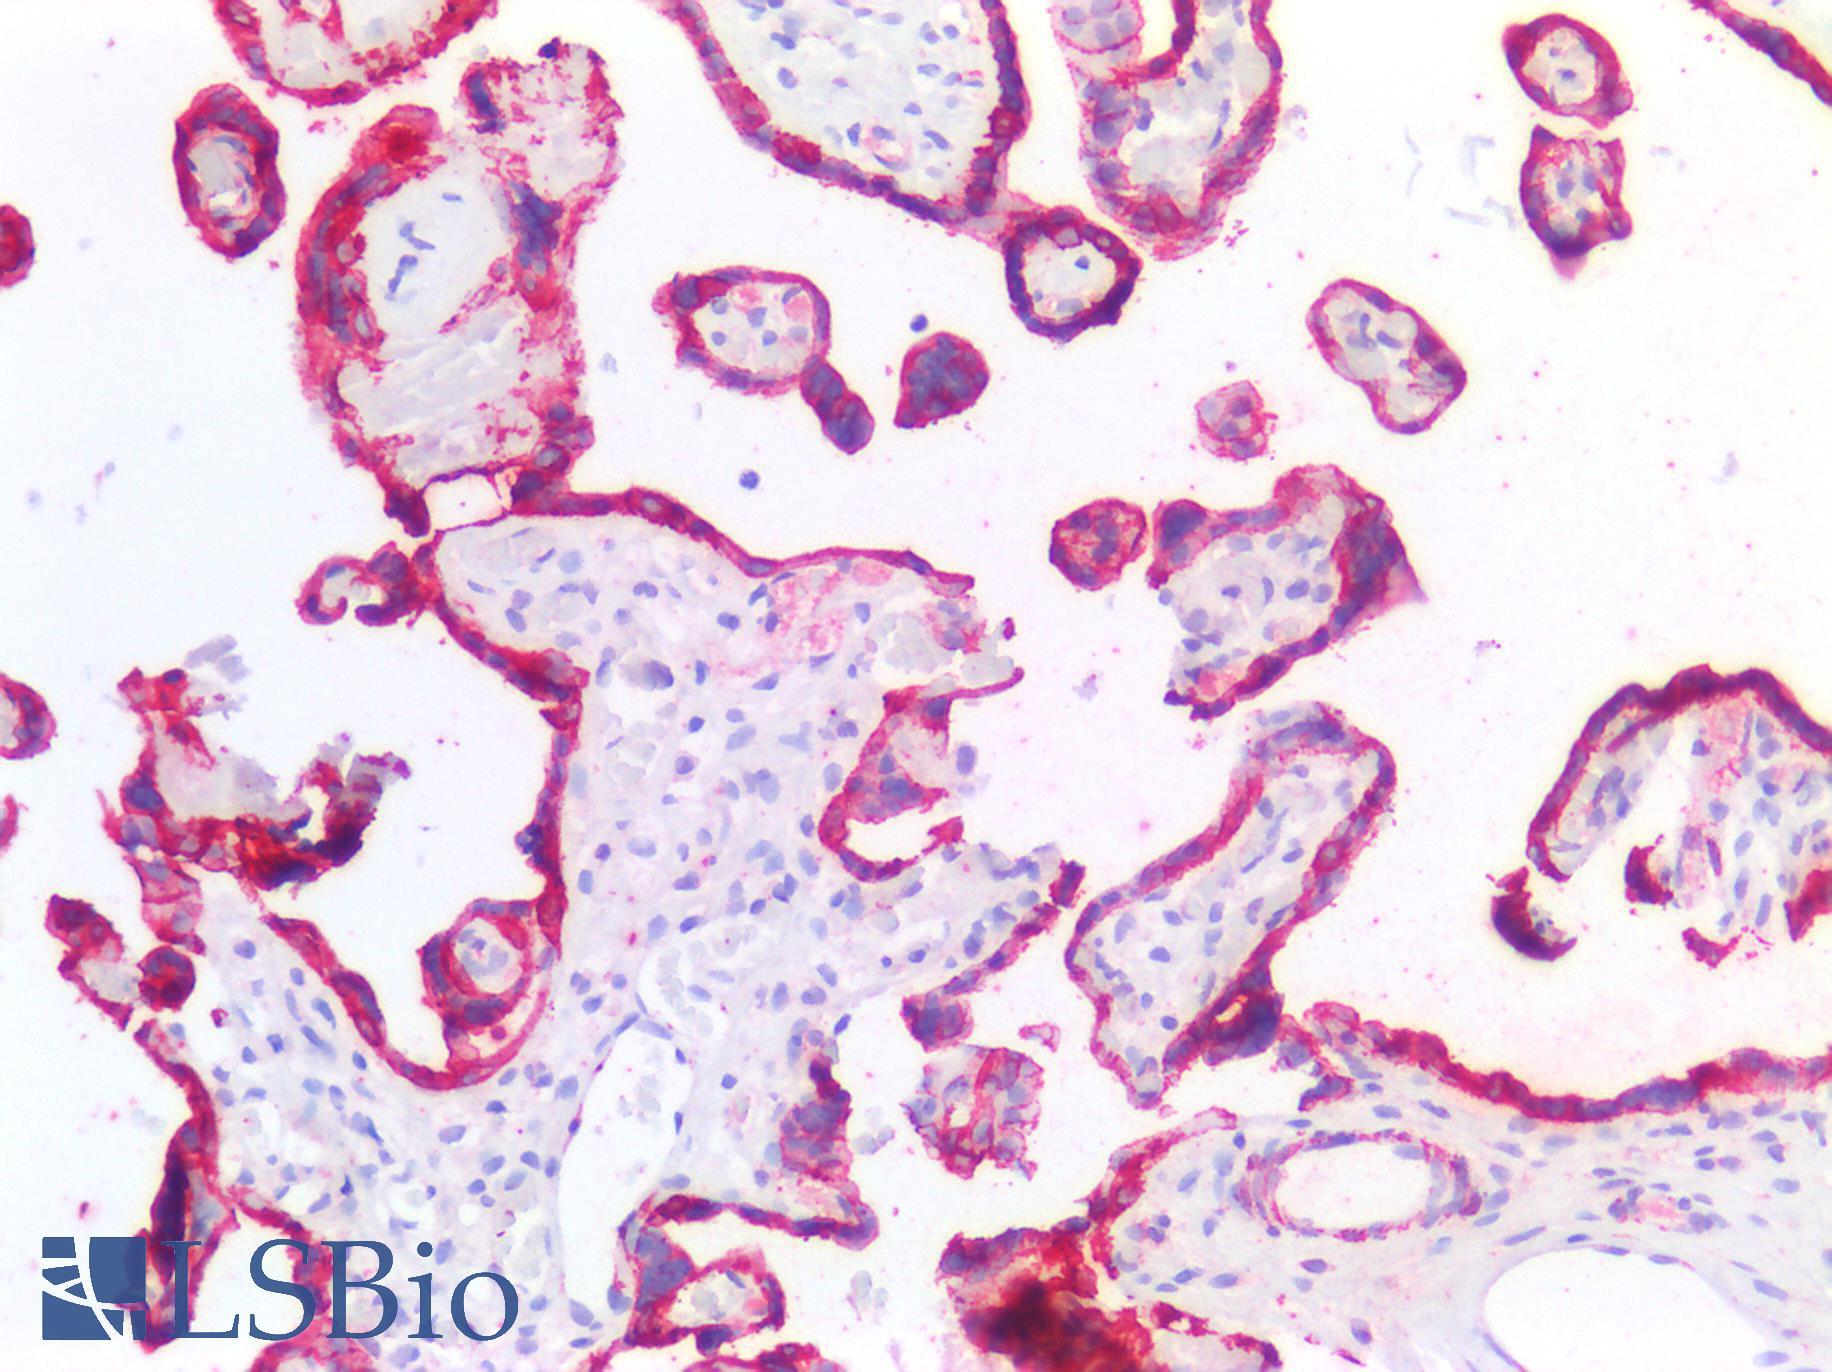 HSD3B7 Antibody - Human Placenta: Formalin-Fixed, Paraffin-Embedded (FFPE)